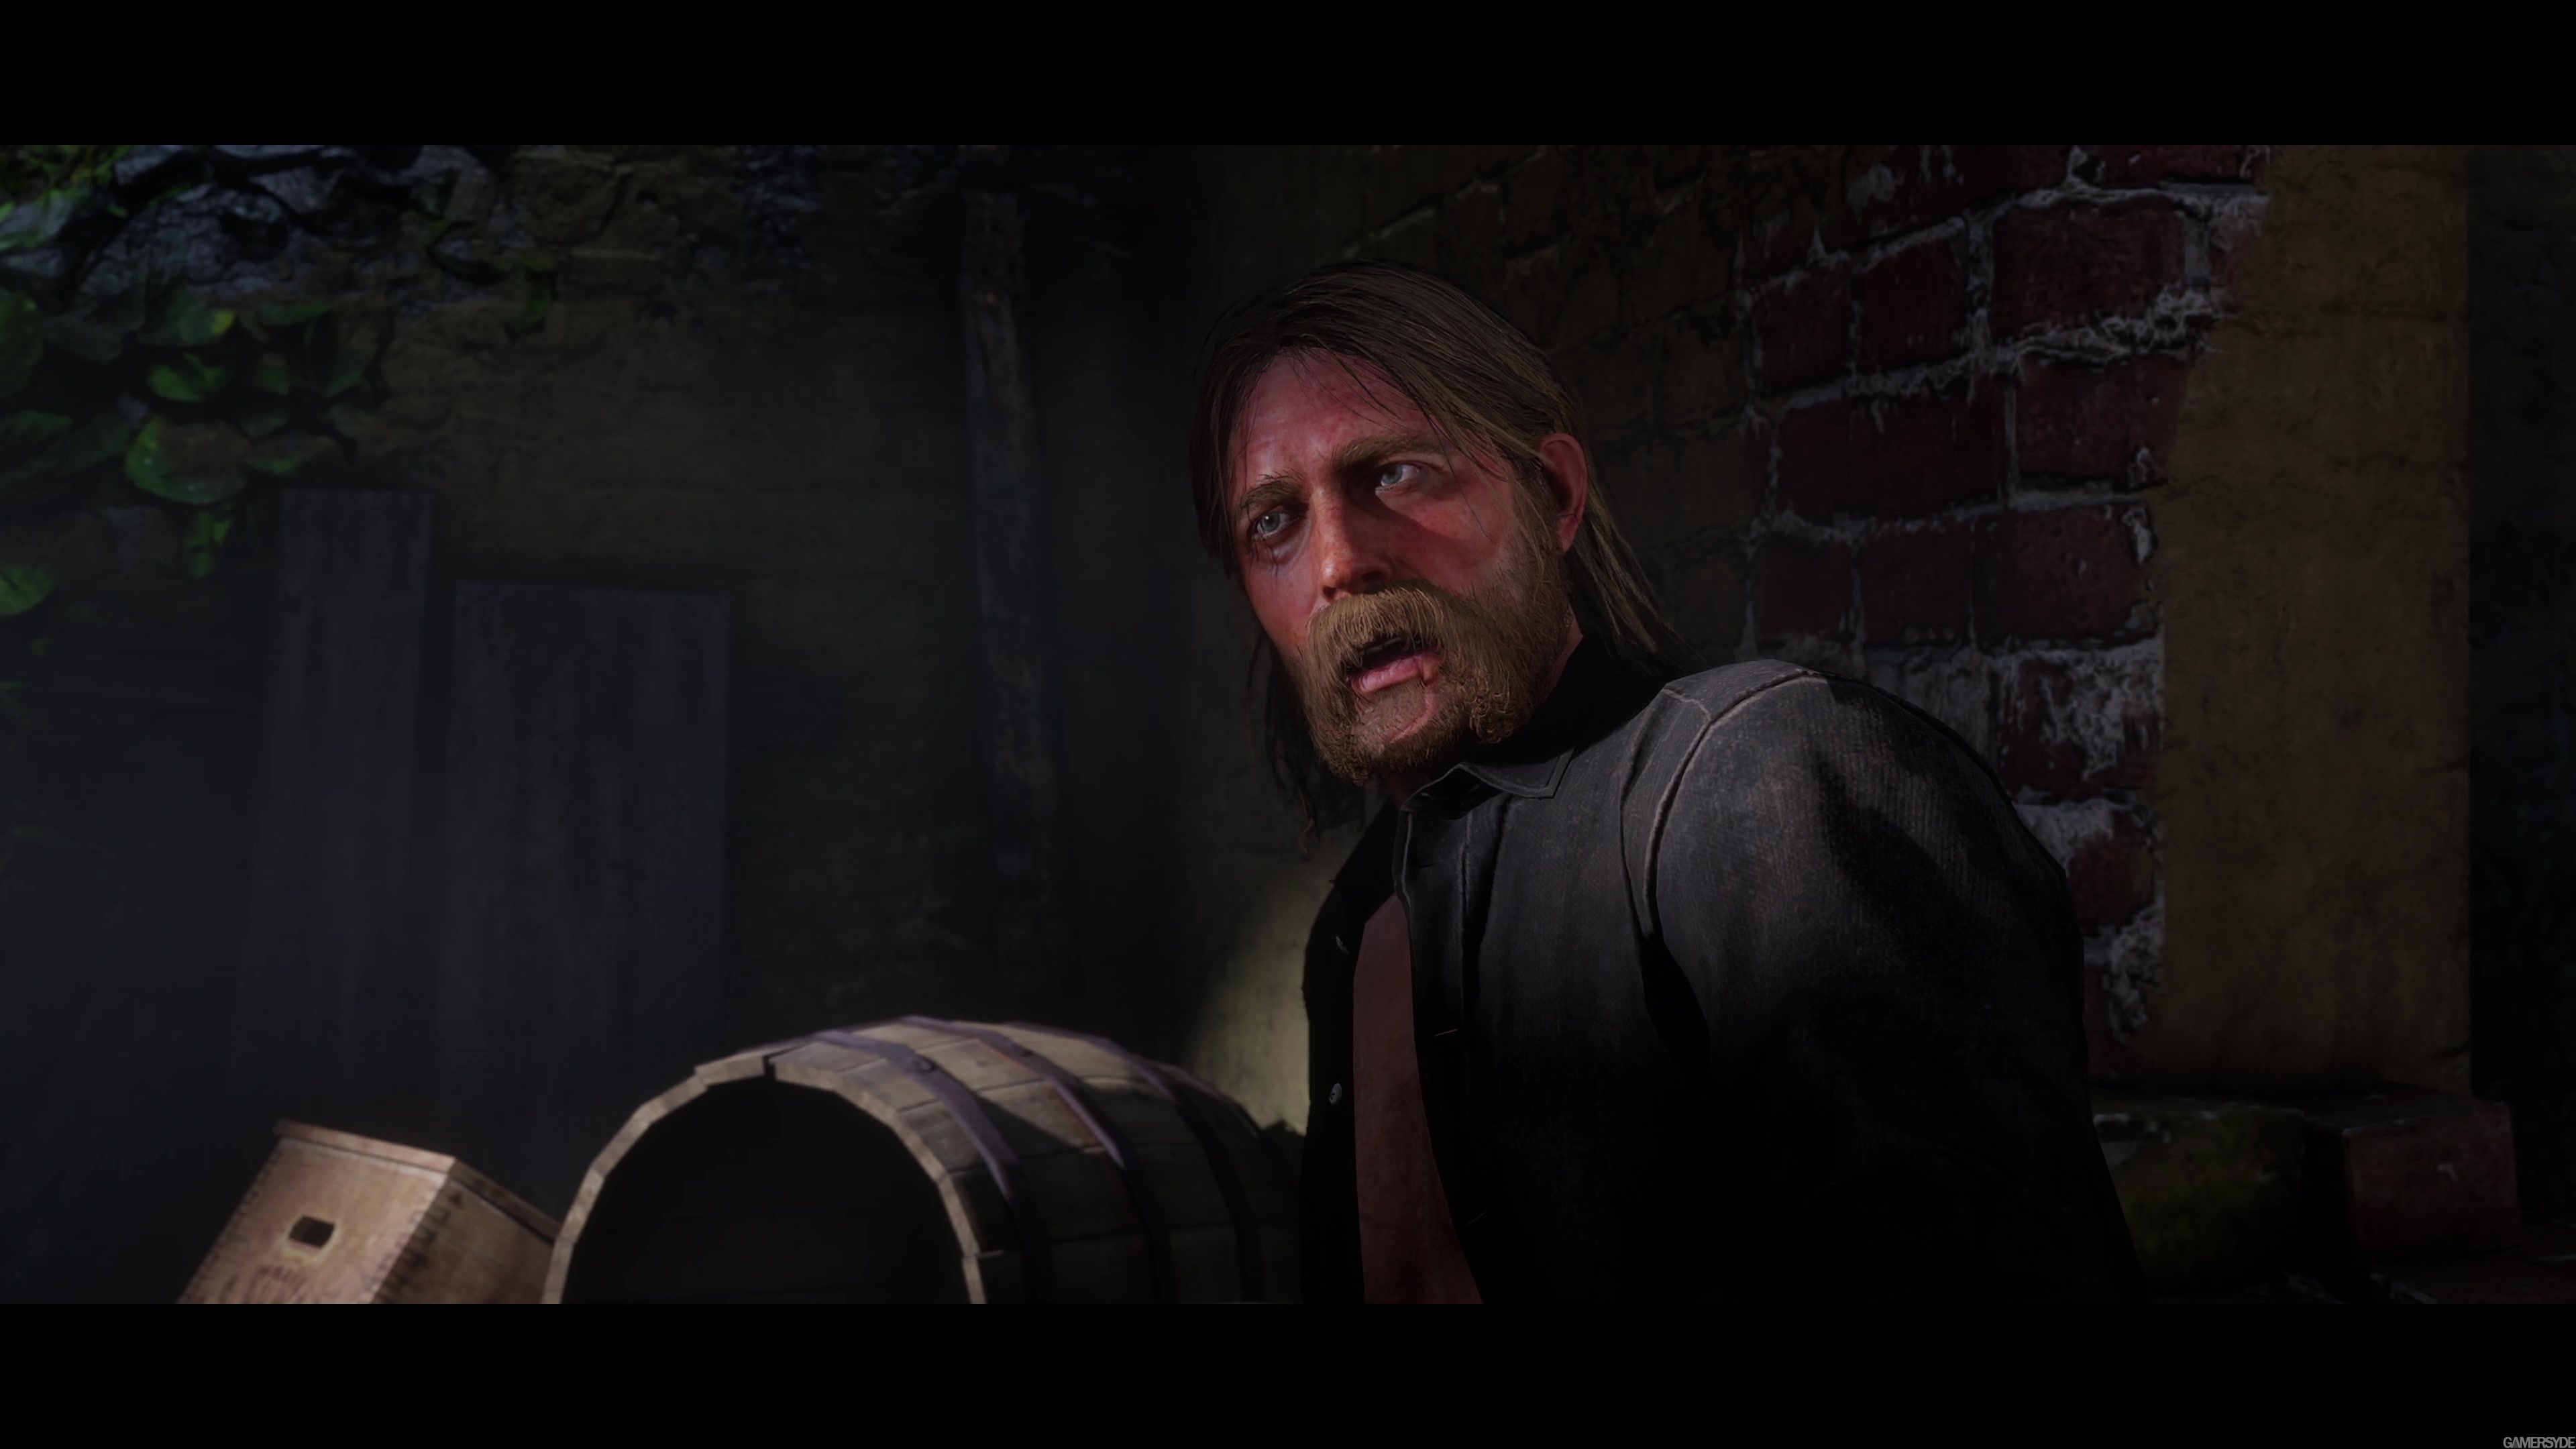 Red Dead Redemption 2 PC Launch Trailer 